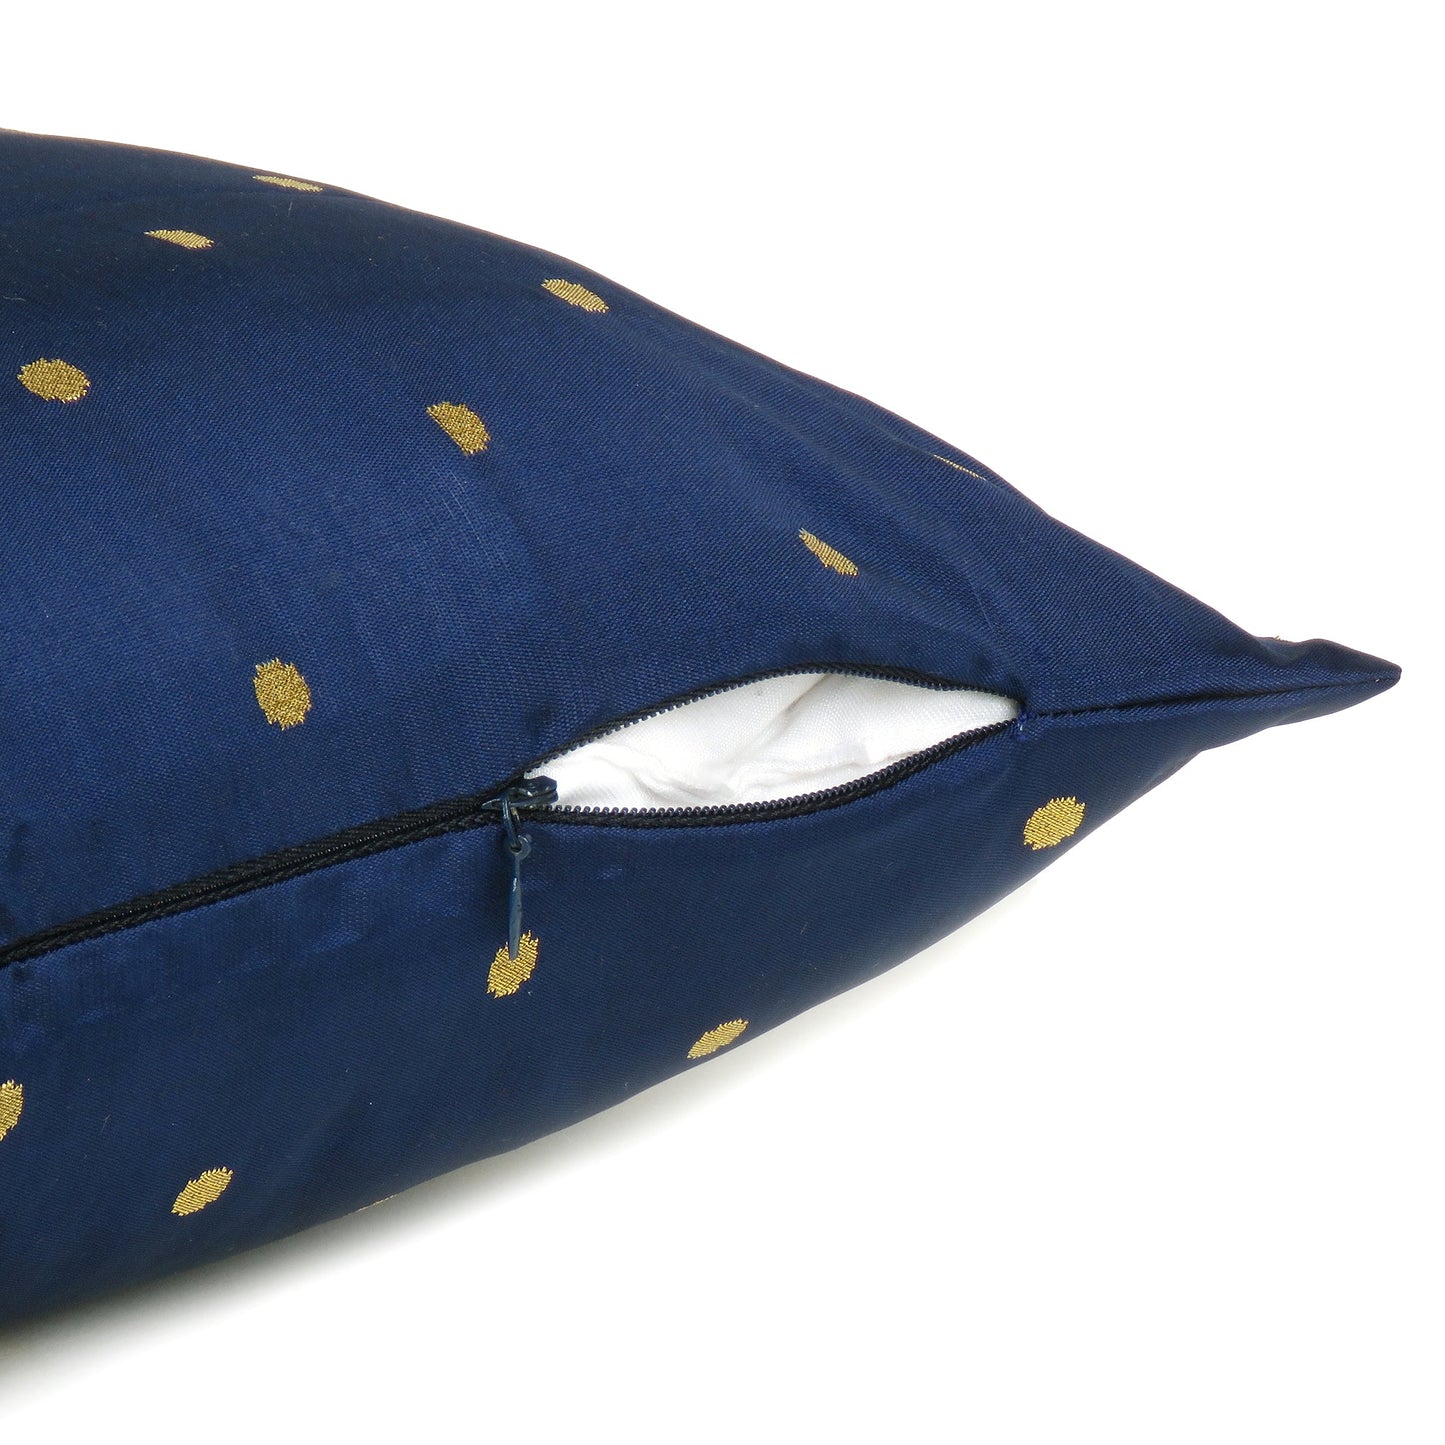 Art Silk Polka Dot Cushion Cover in Set of 2 - Navy Blue